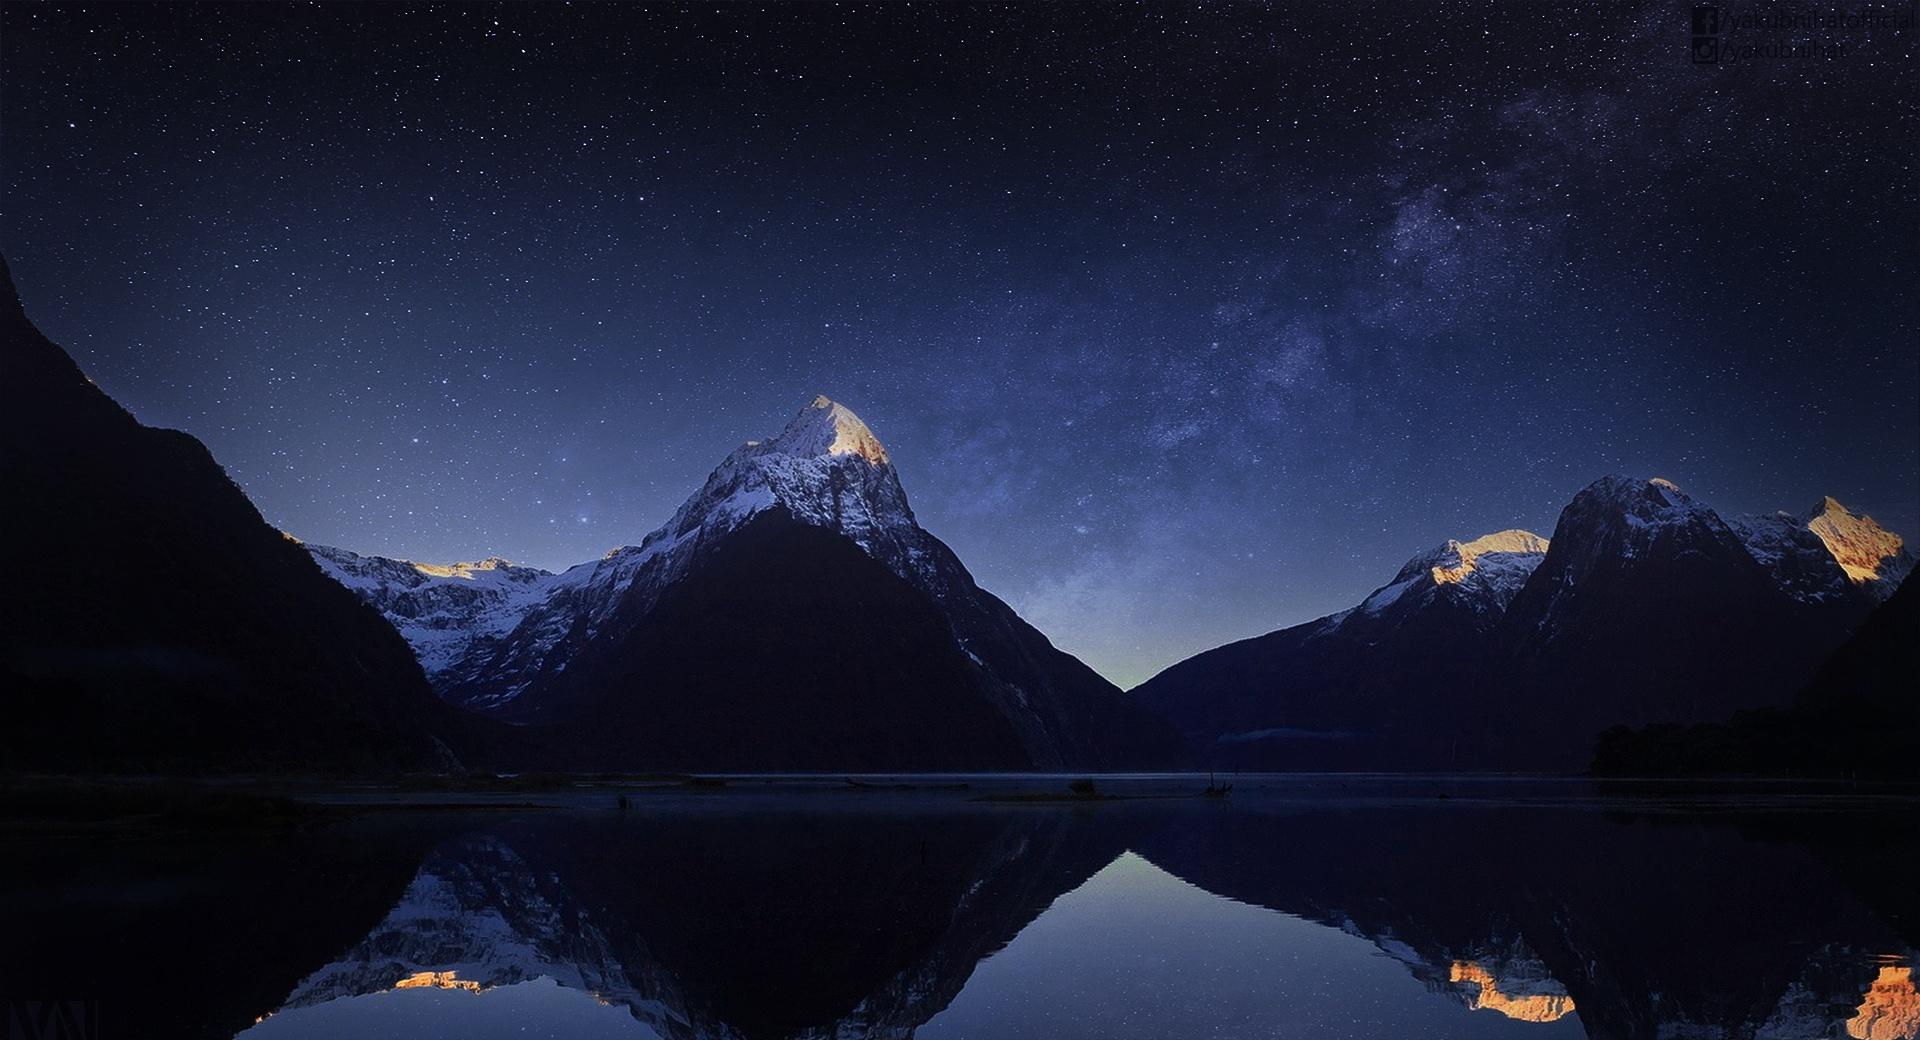 Mountain Milky Way by Yakub Nihat at 2048 x 2048 iPad size wallpapers HD quality